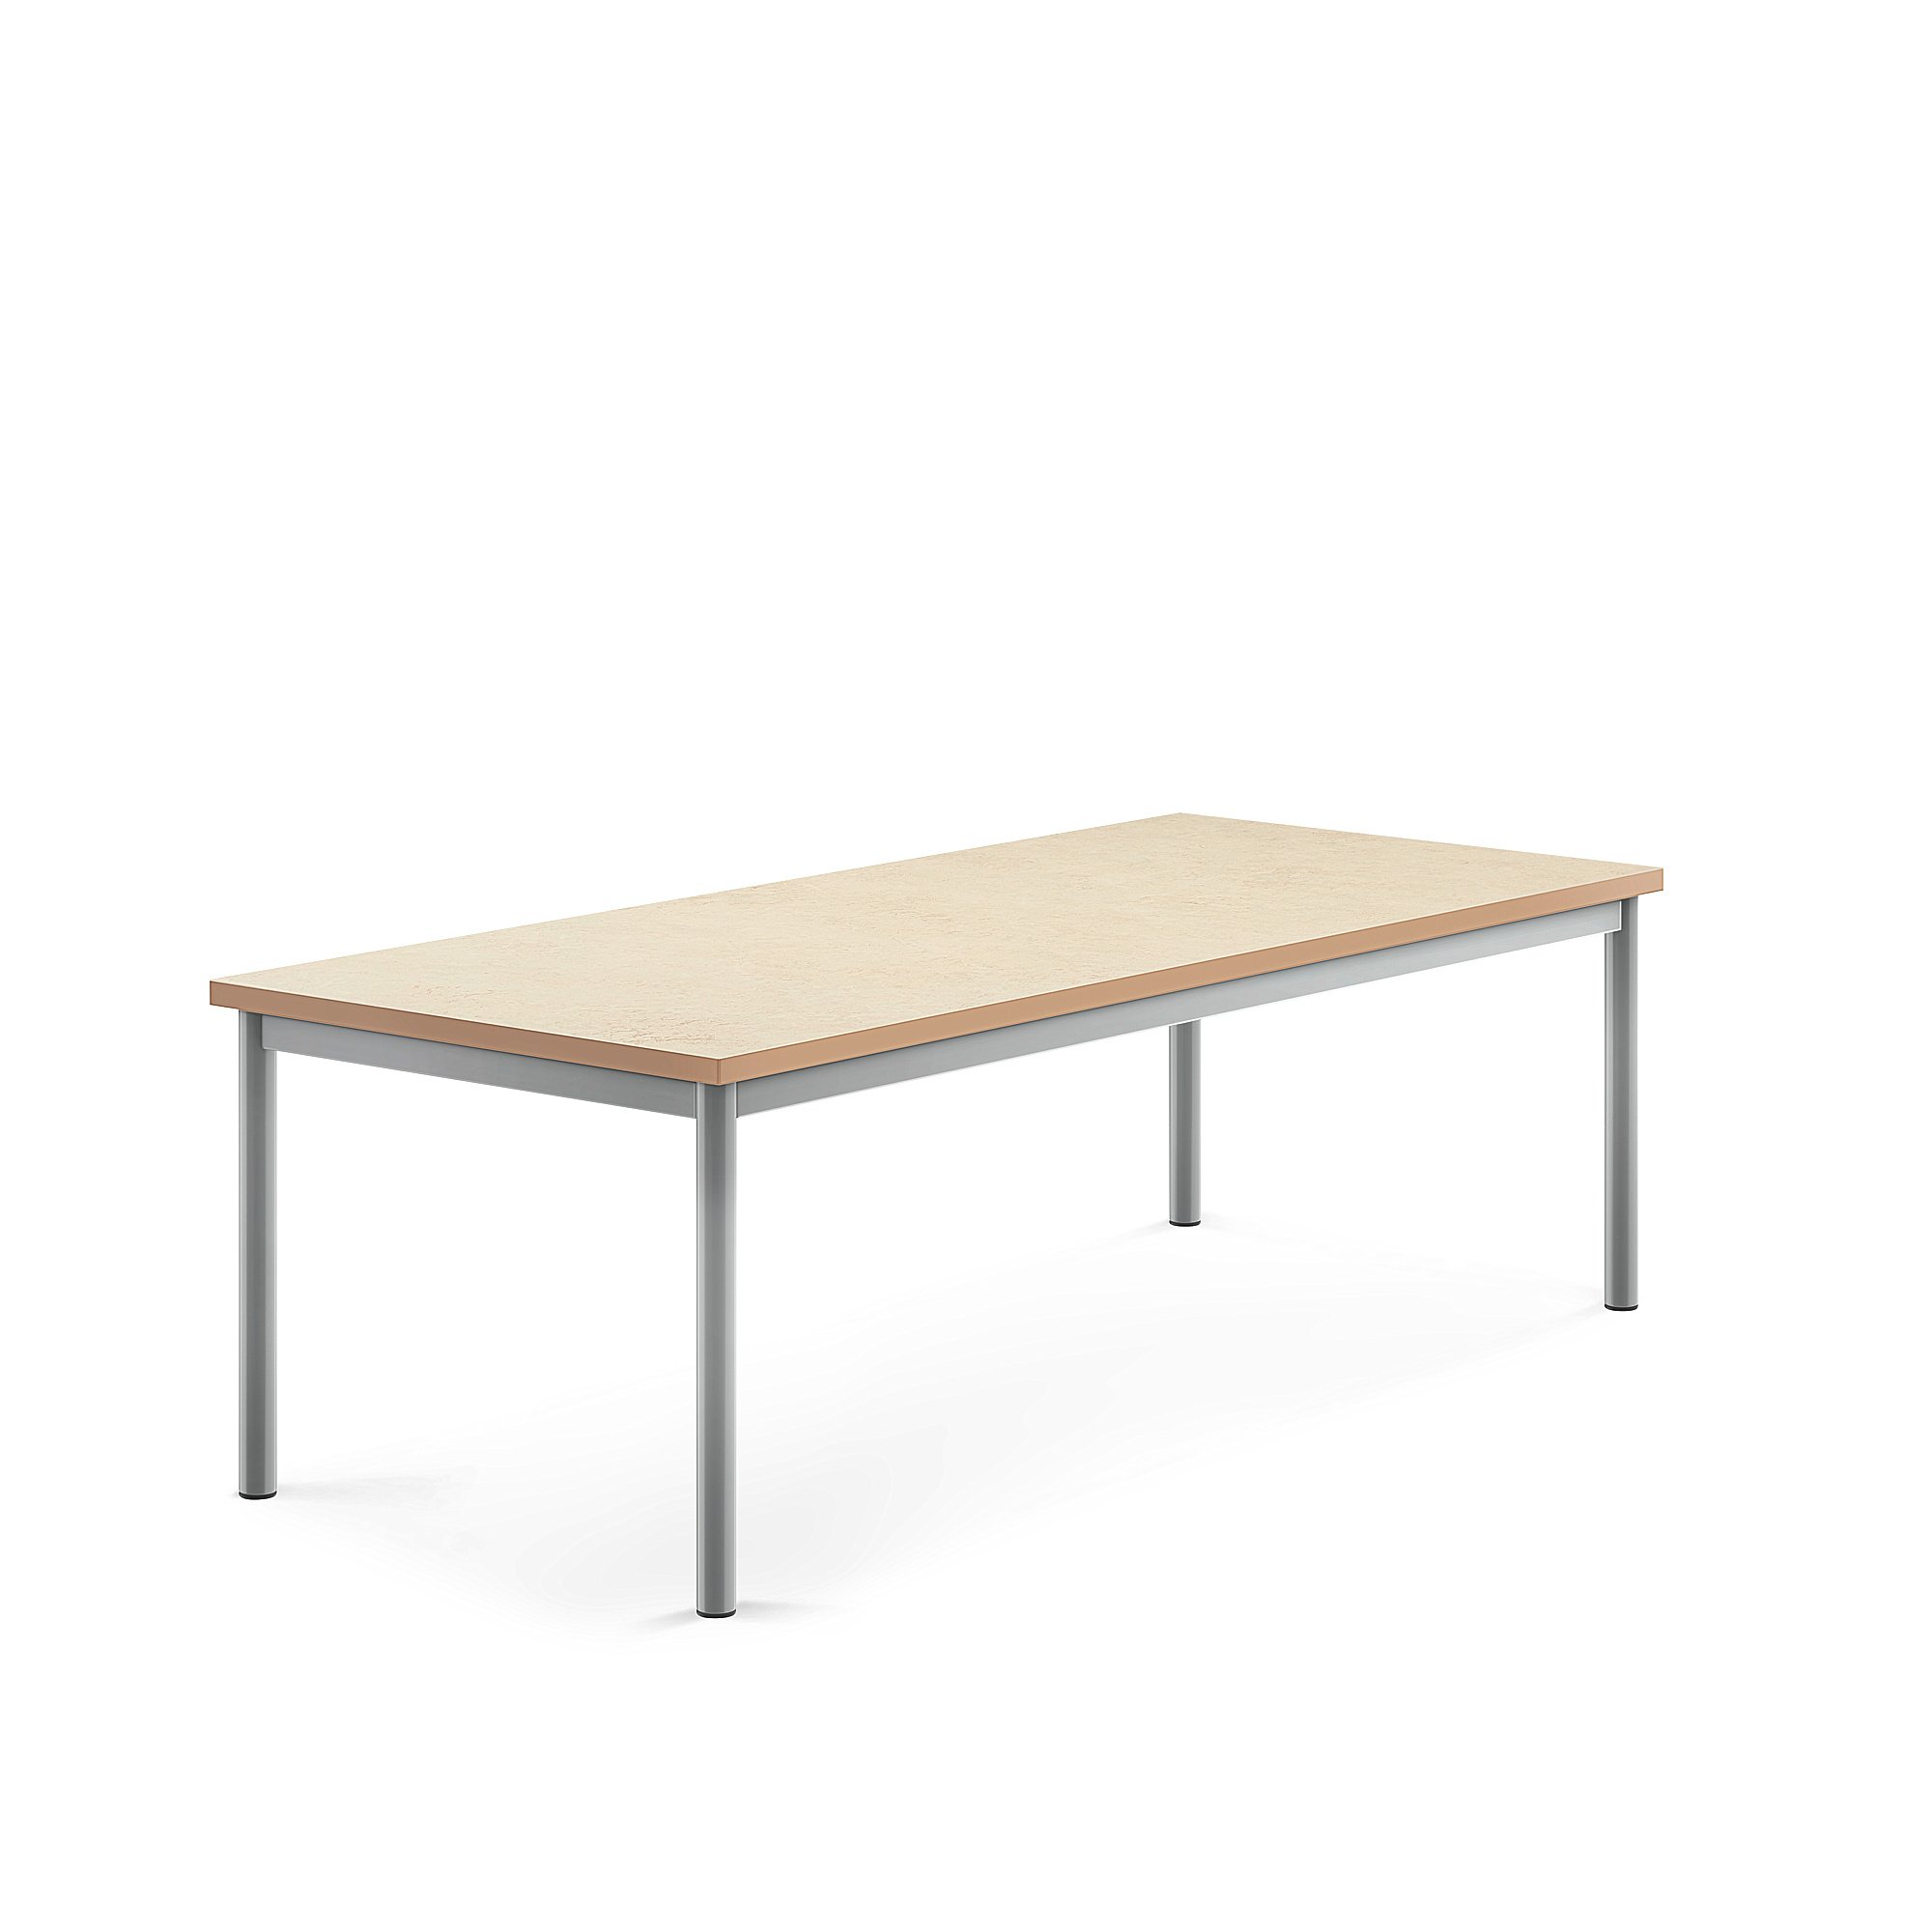 Stůl SONITUS, 1600x700x500 mm, stříbrné nohy, deska s linoleem, béžová